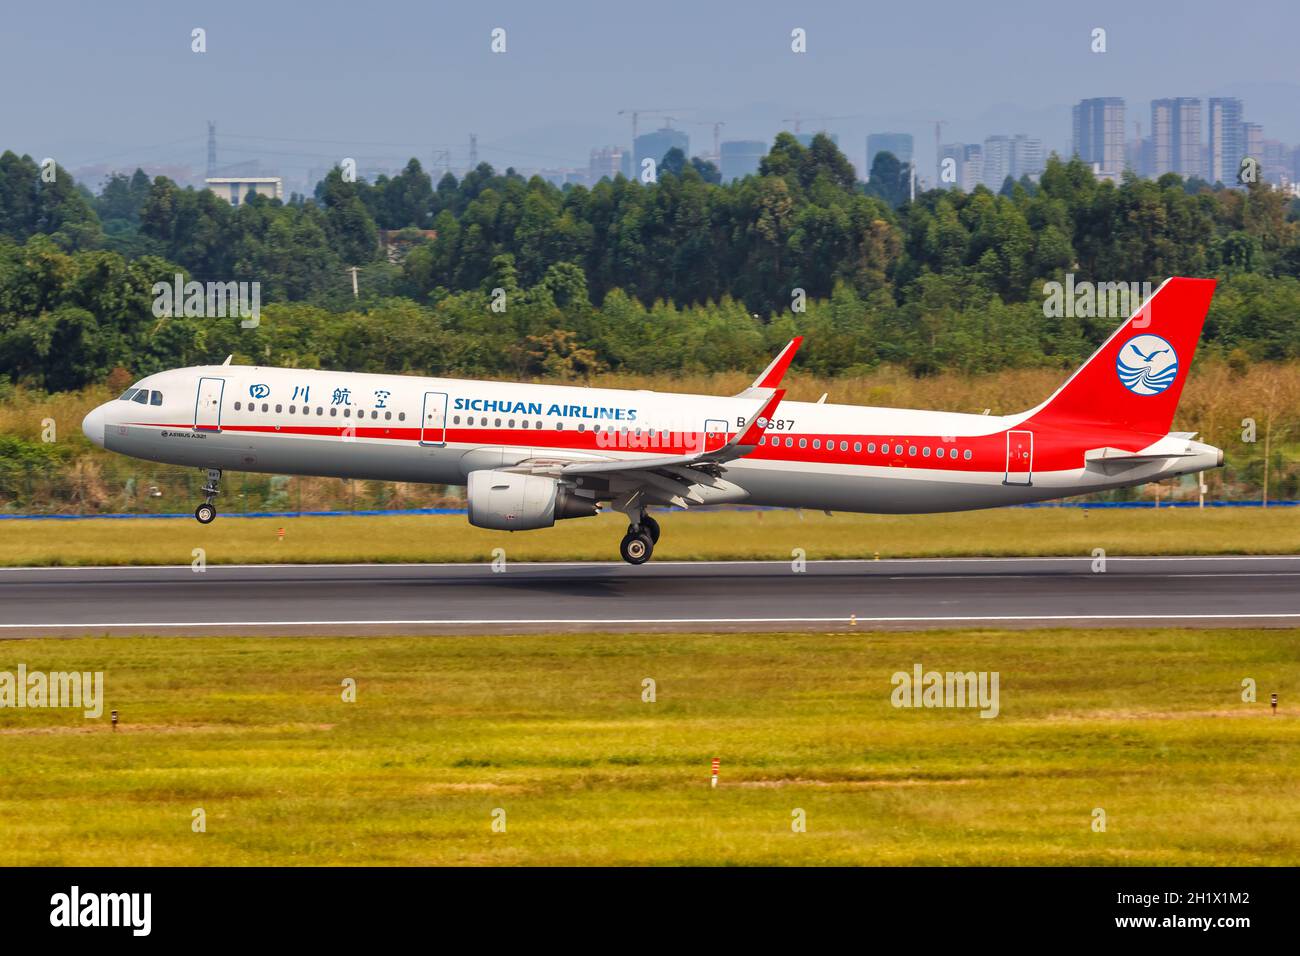 Chengdu, China - September 22, 2019: Sichuan Airlines Airbus A321 airplane at Chengdu Shuangliu airport (CTU) in China. Stock Photo